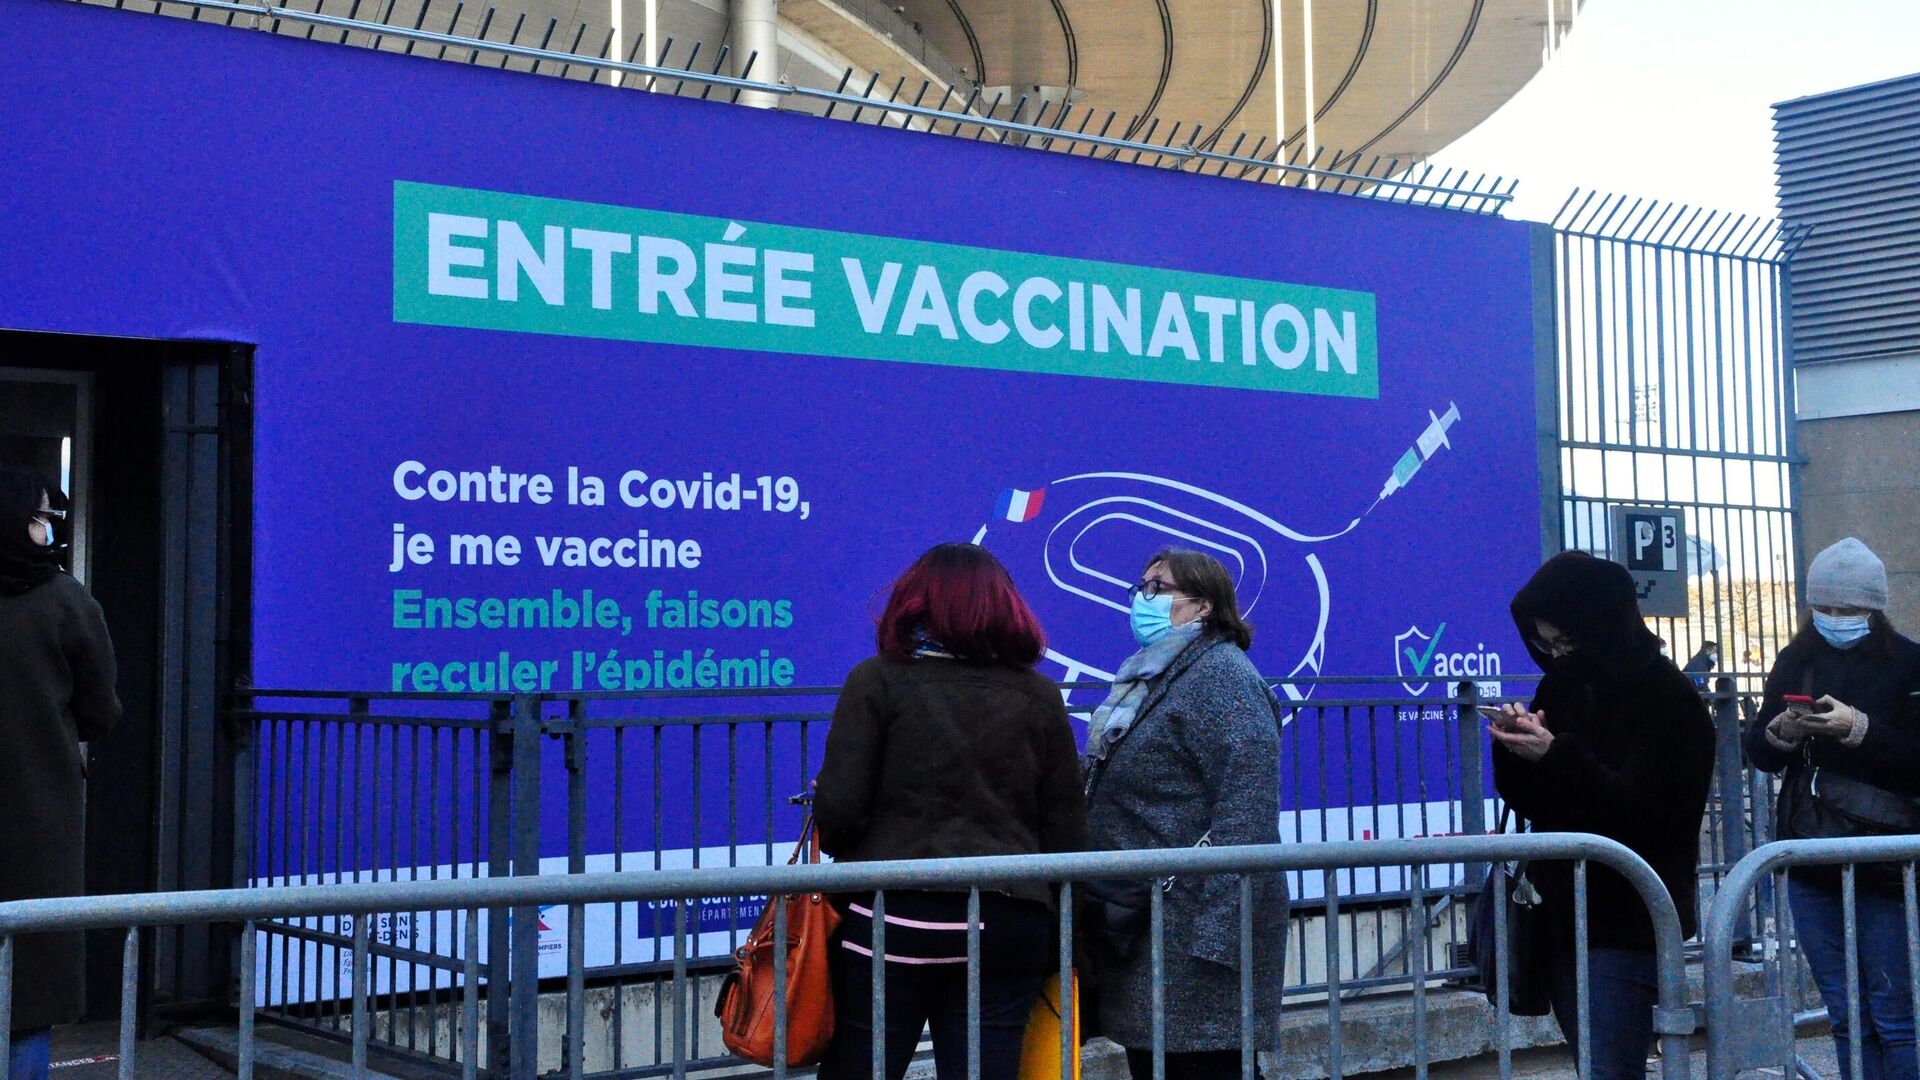 Местные жители стоят в очереди на вакцинацию от коронавируса в центре вакцинодроме на стадионе Стад де Франс - РИА Новости, 1920, 14.08.2021